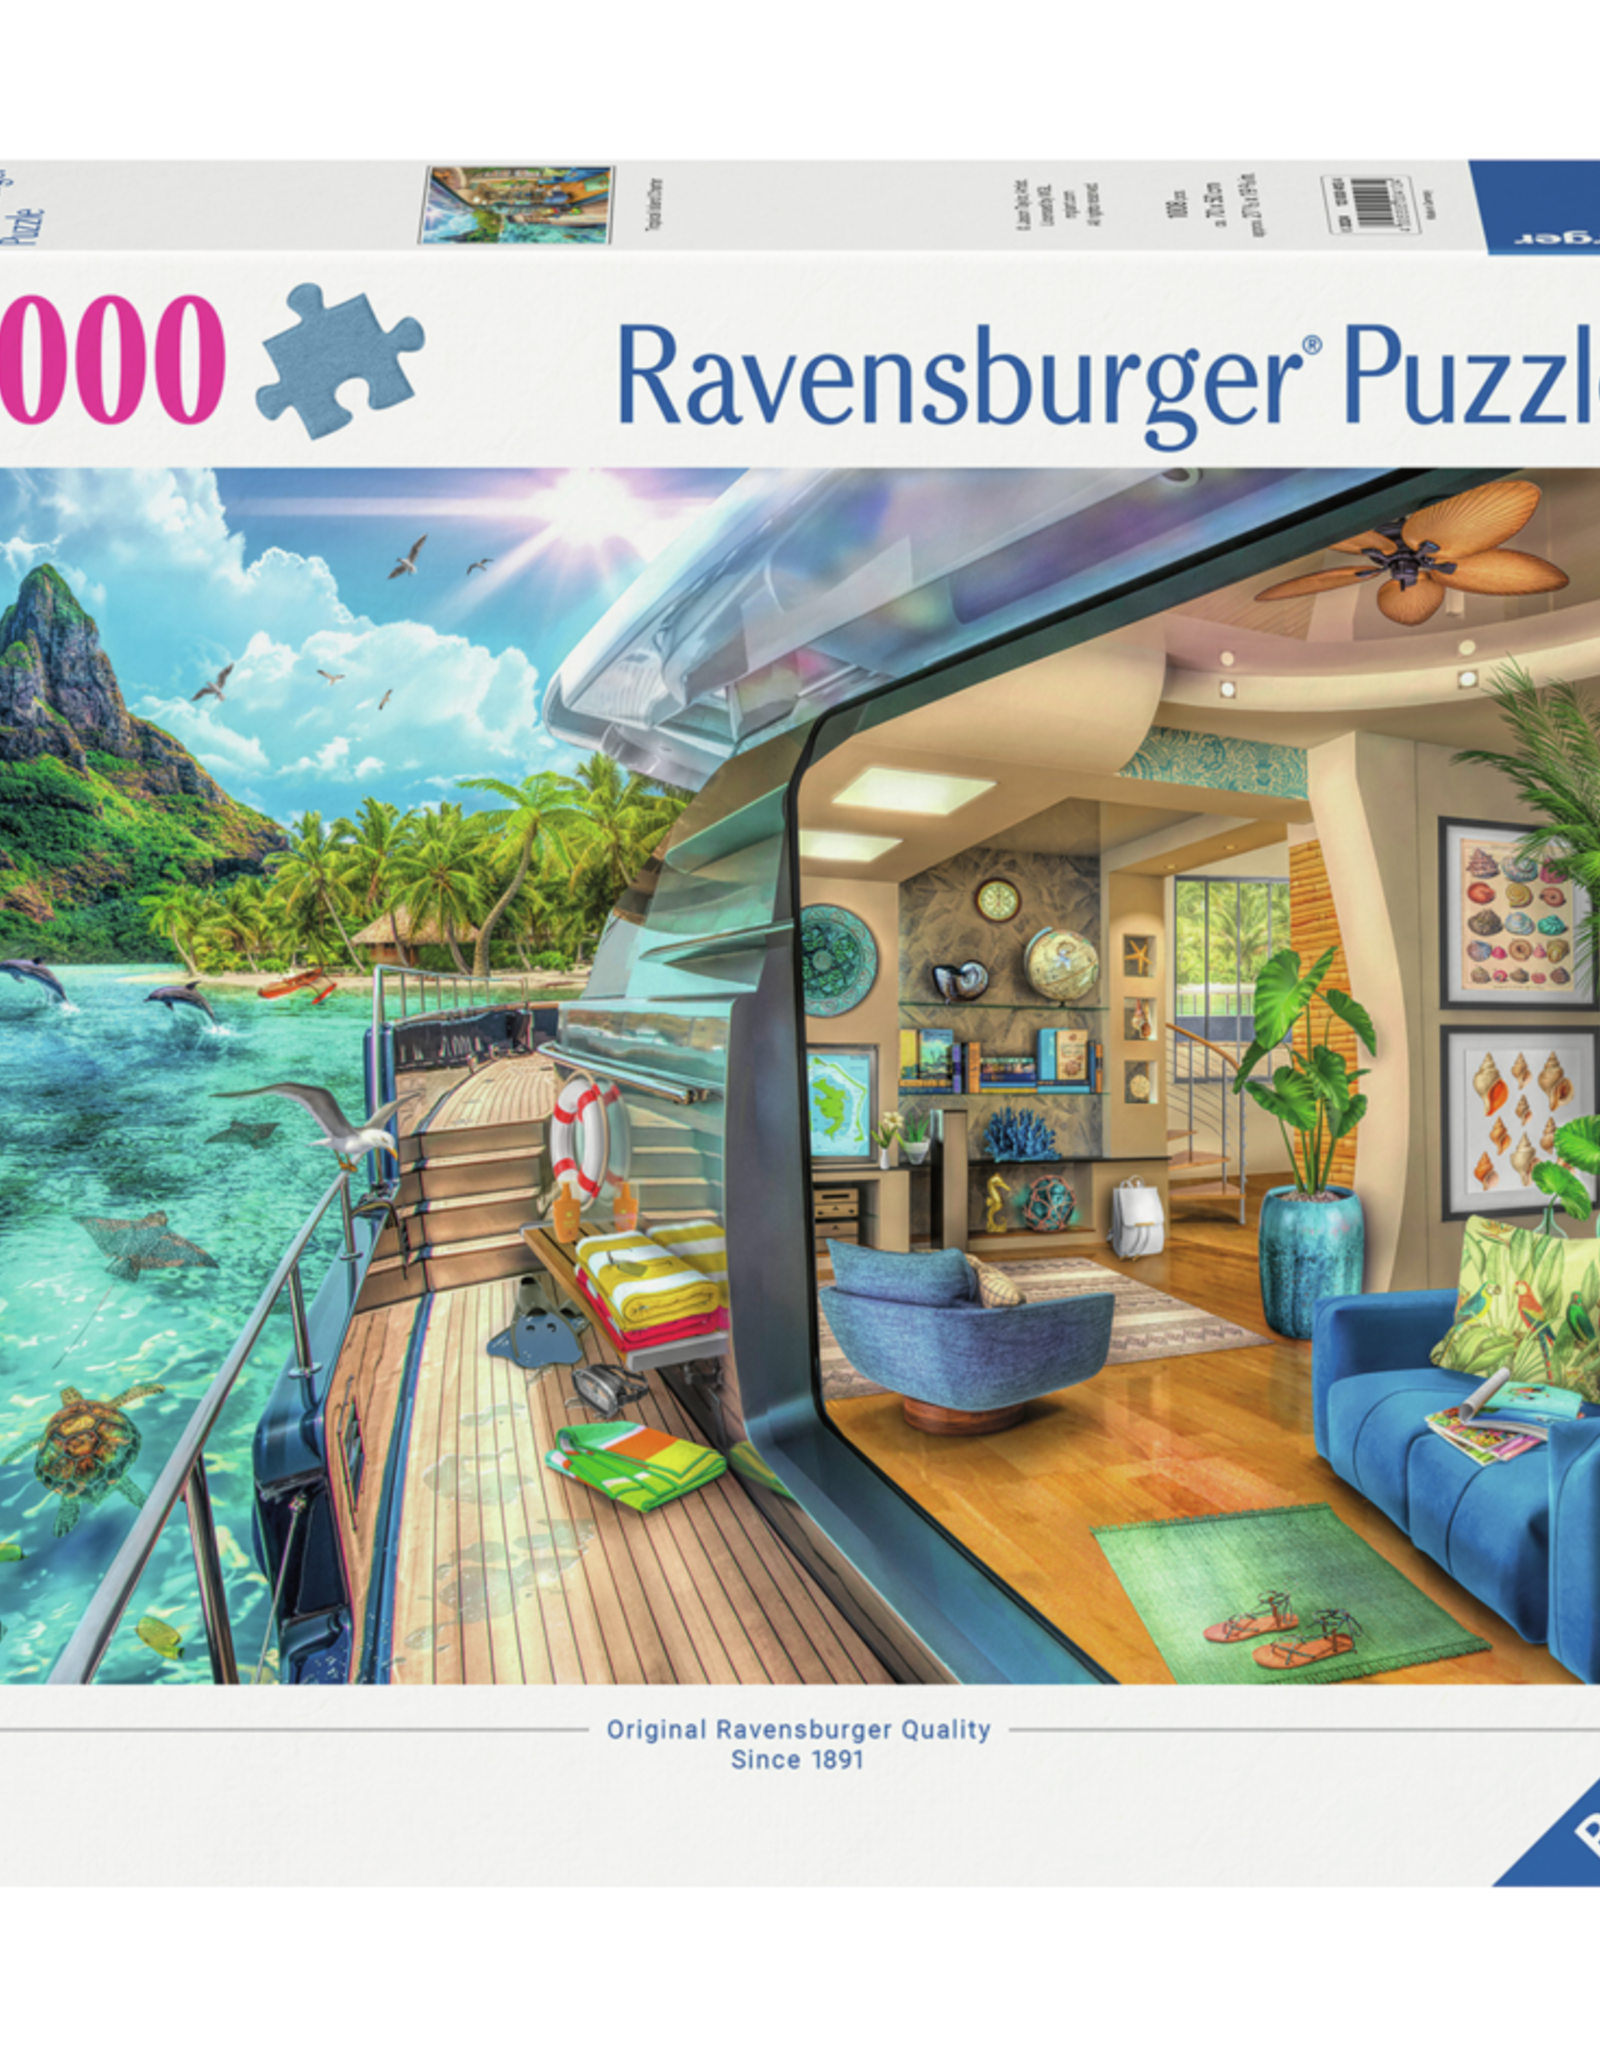 Ravensburger Tropical Island Charter 1000 pc Puzzle